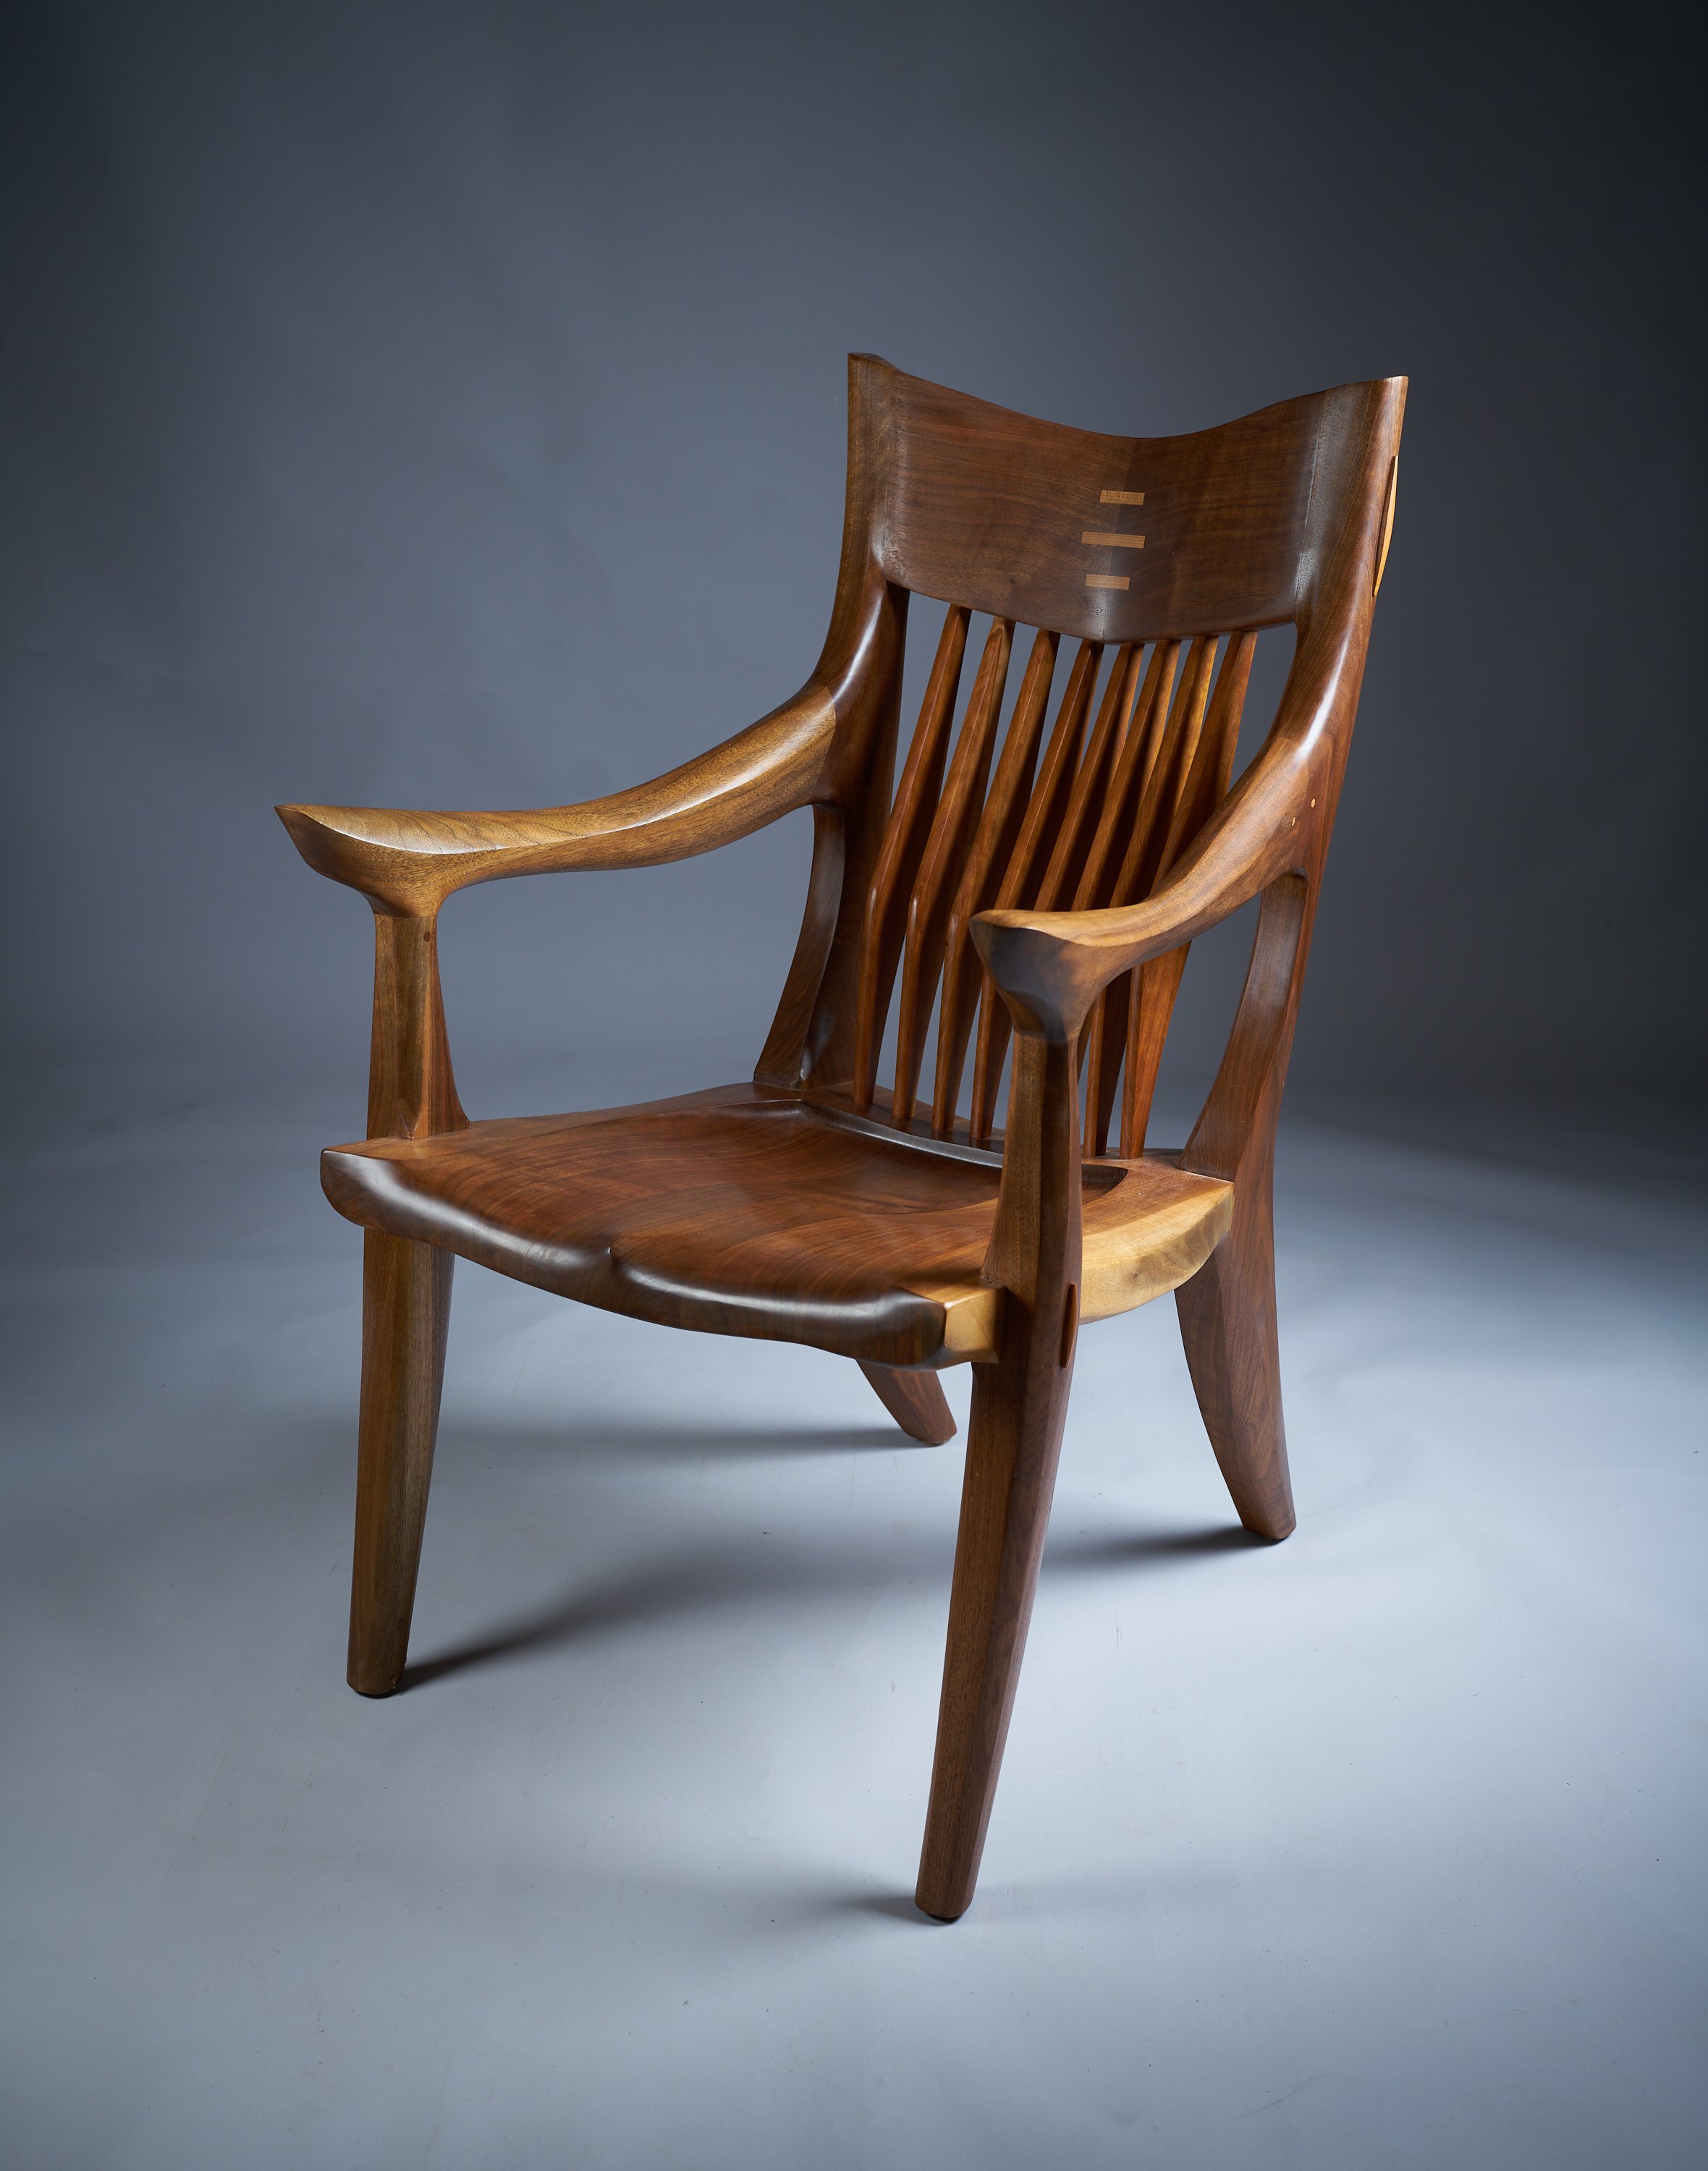 Franklin chair